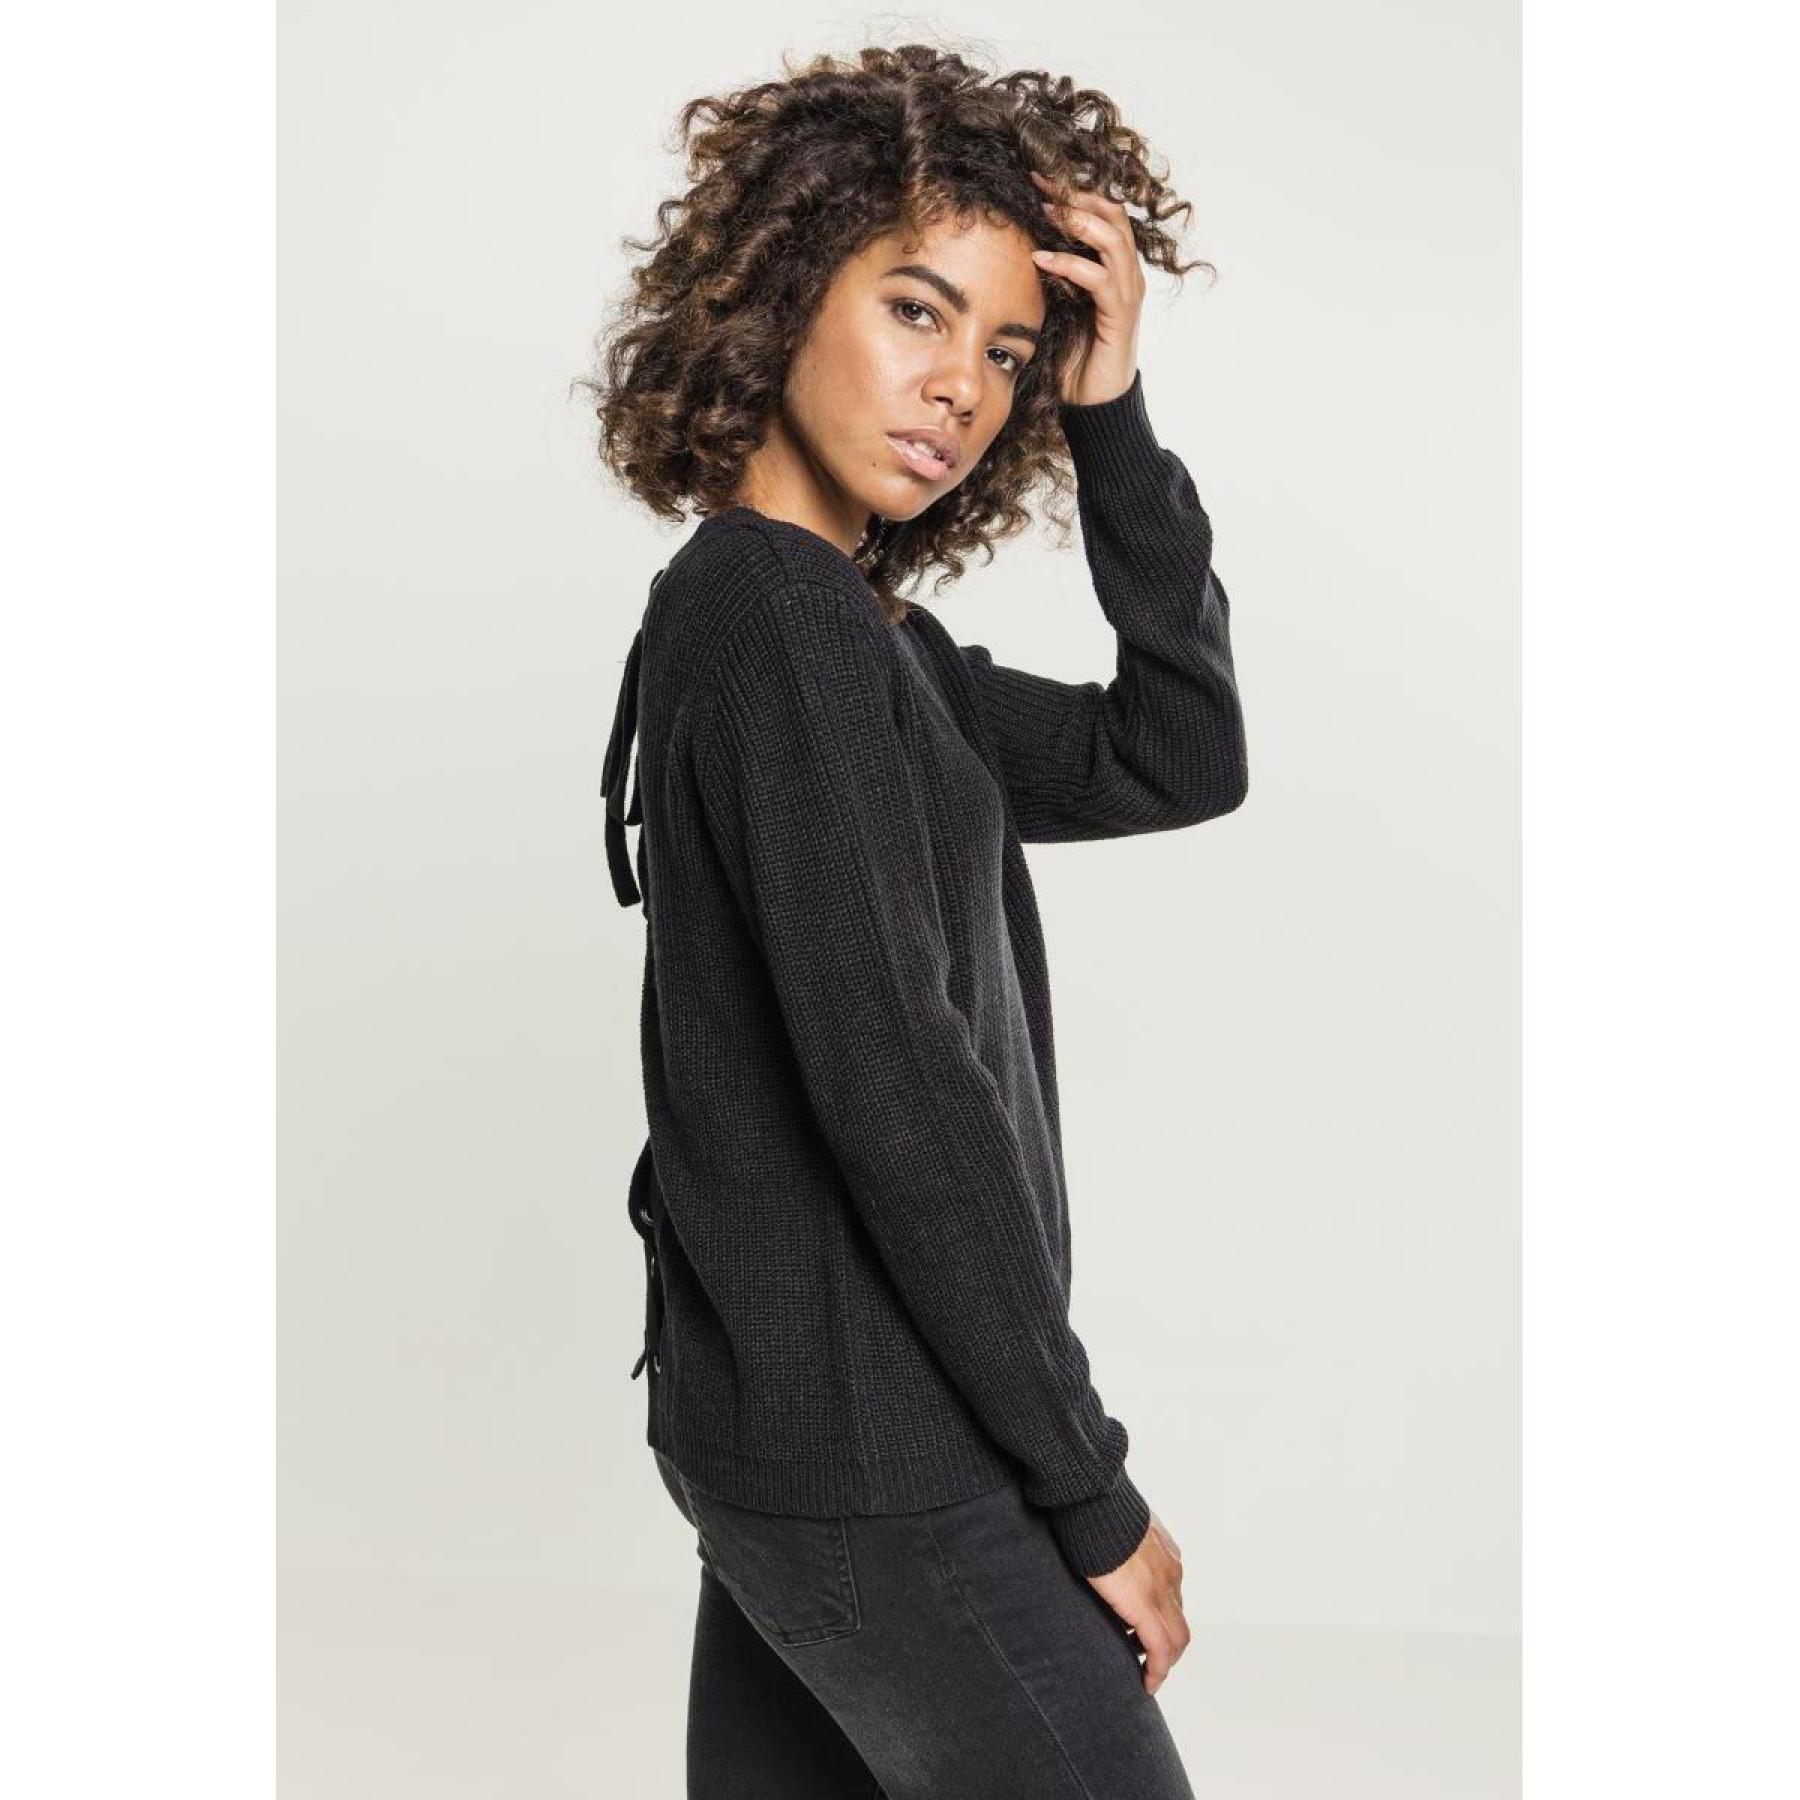 Sweatshirt femme Urban Classic back lace up